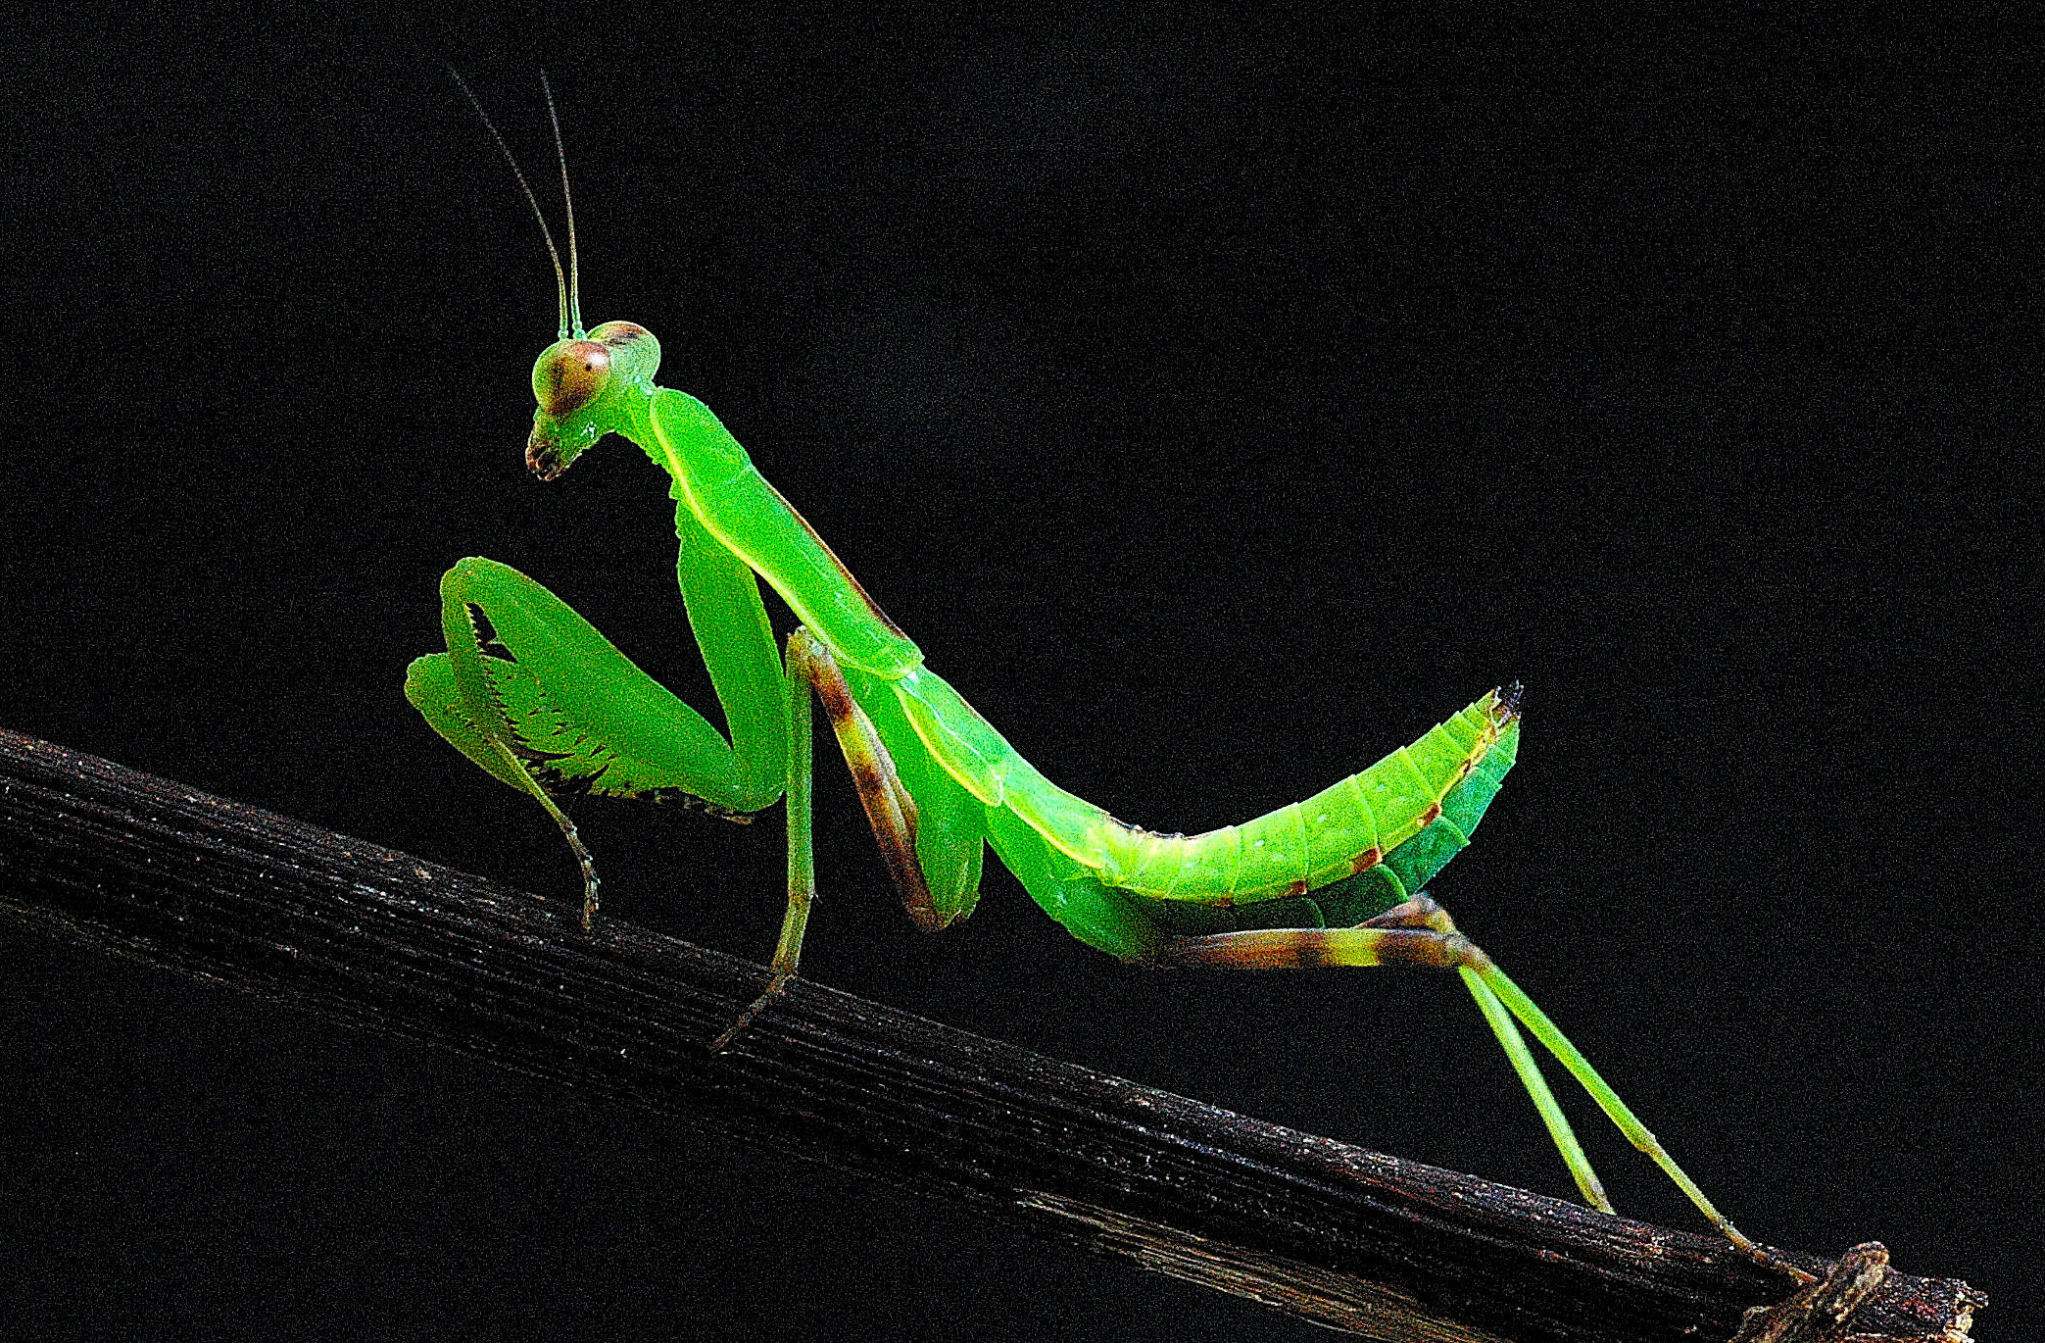 What do mantis eat